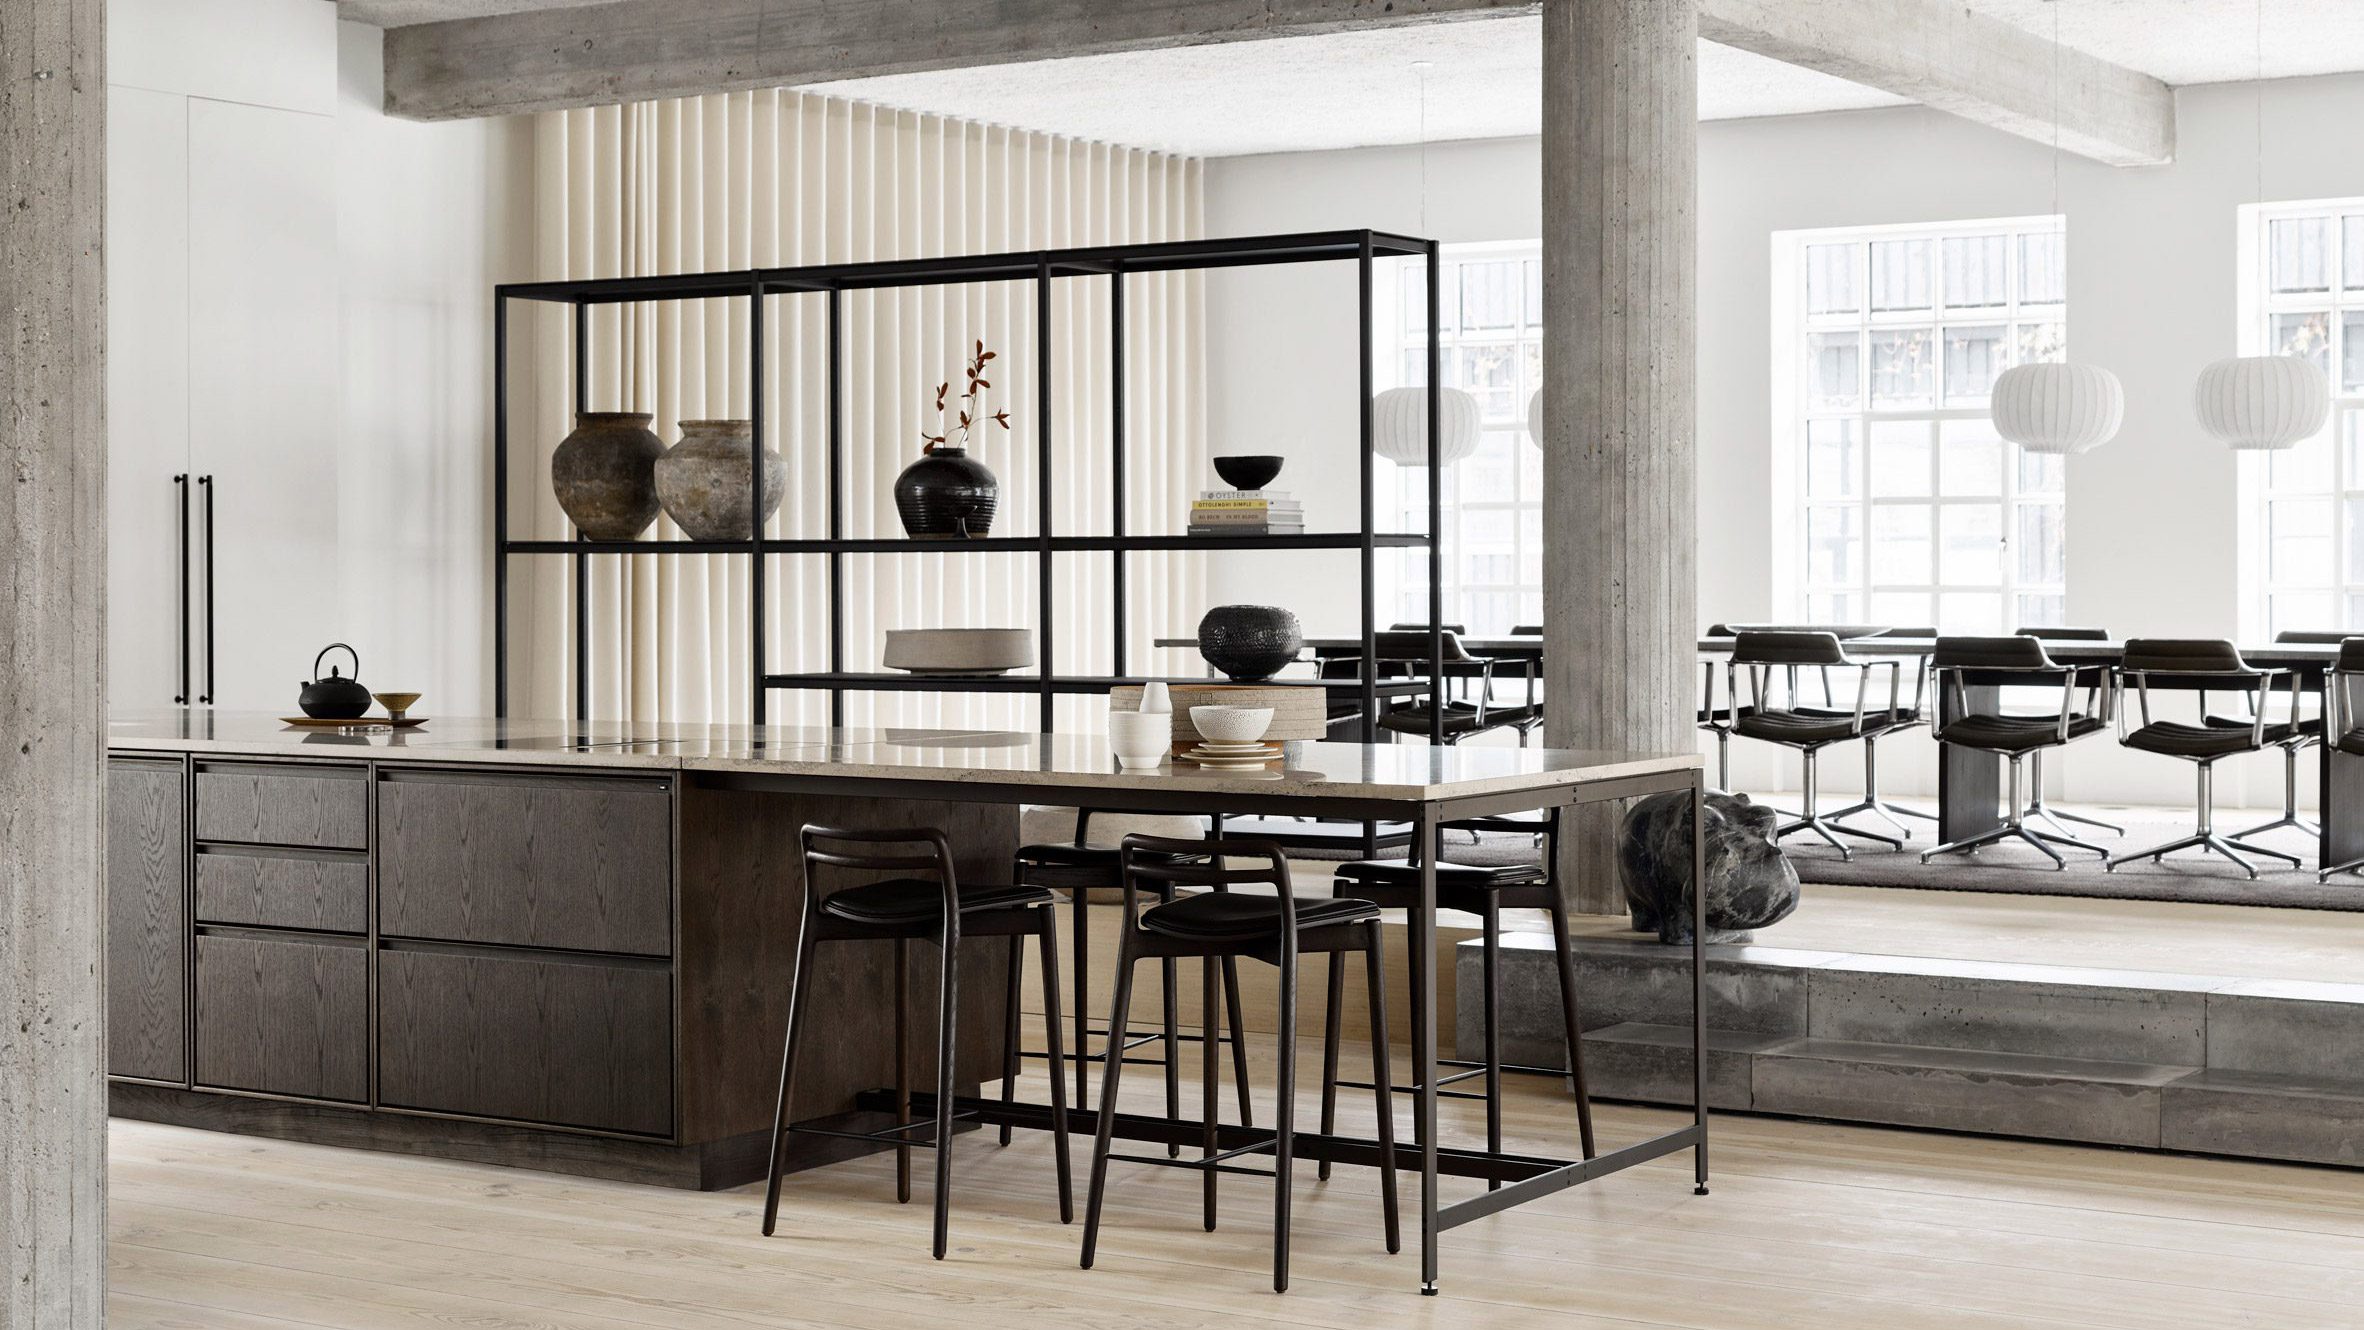 eight pared-back and elegant scandinavian kitchen designs